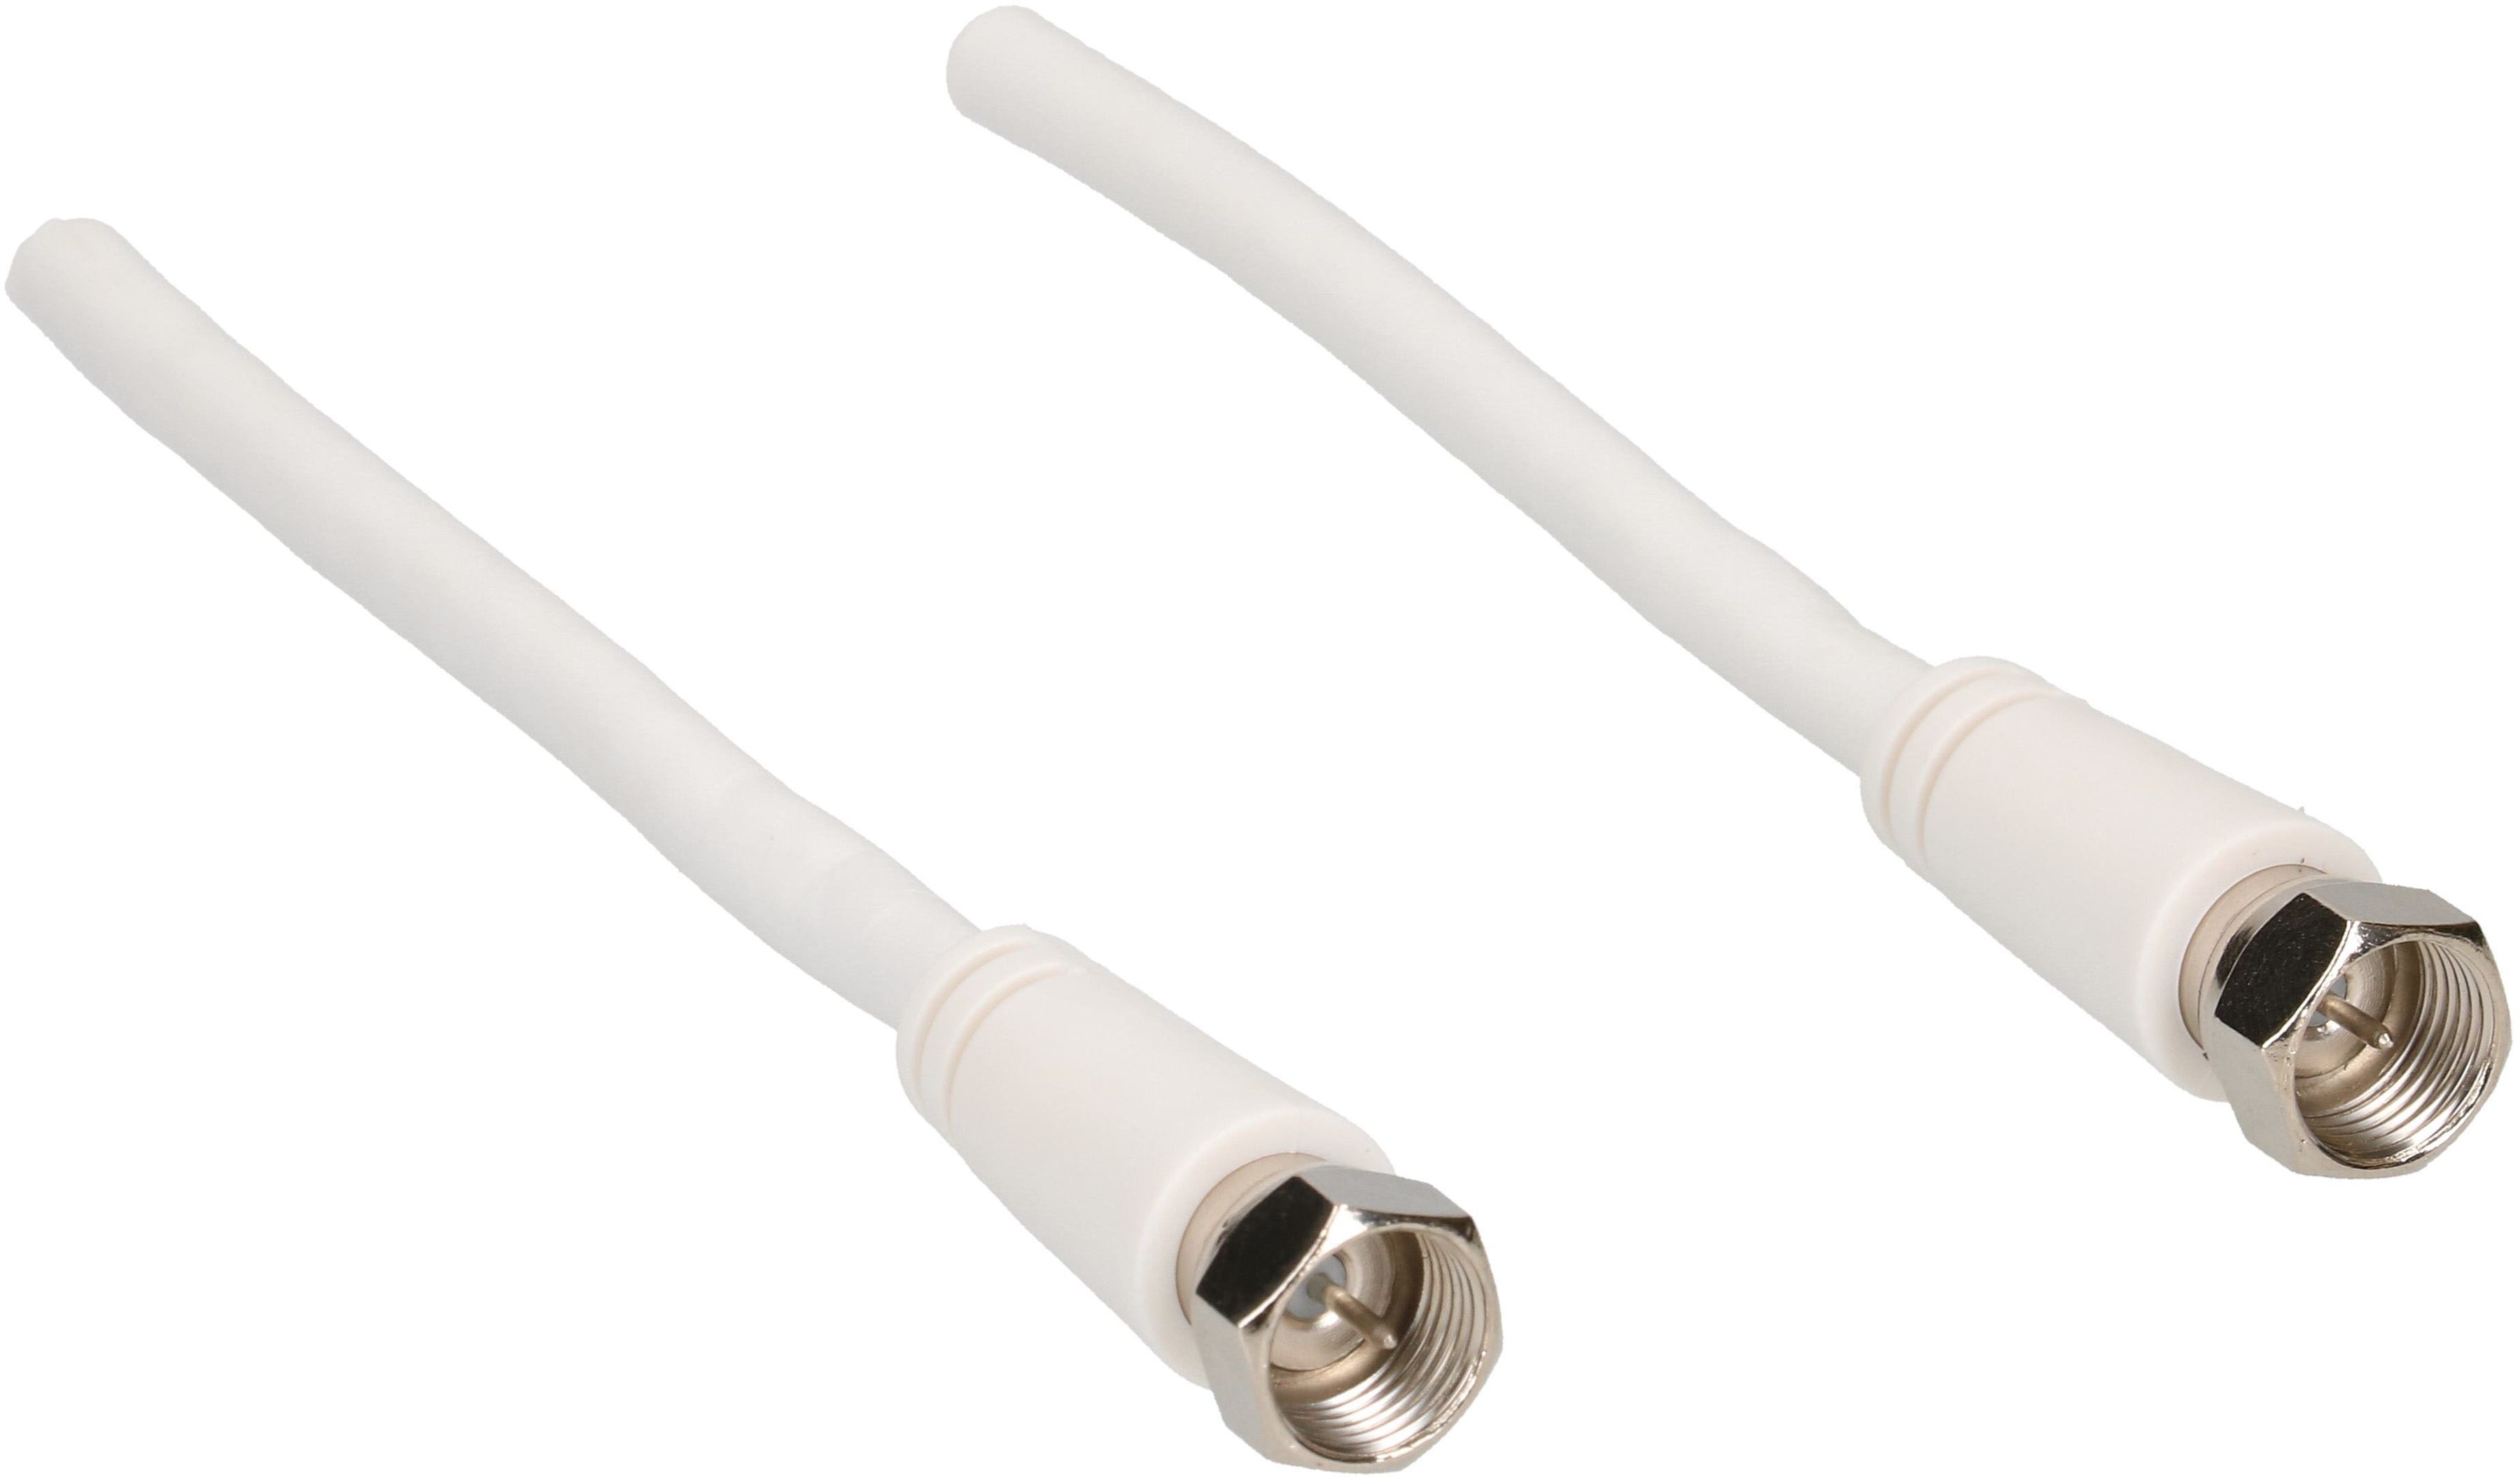 câble de raccordement SAT 90dB 1.5m blanc